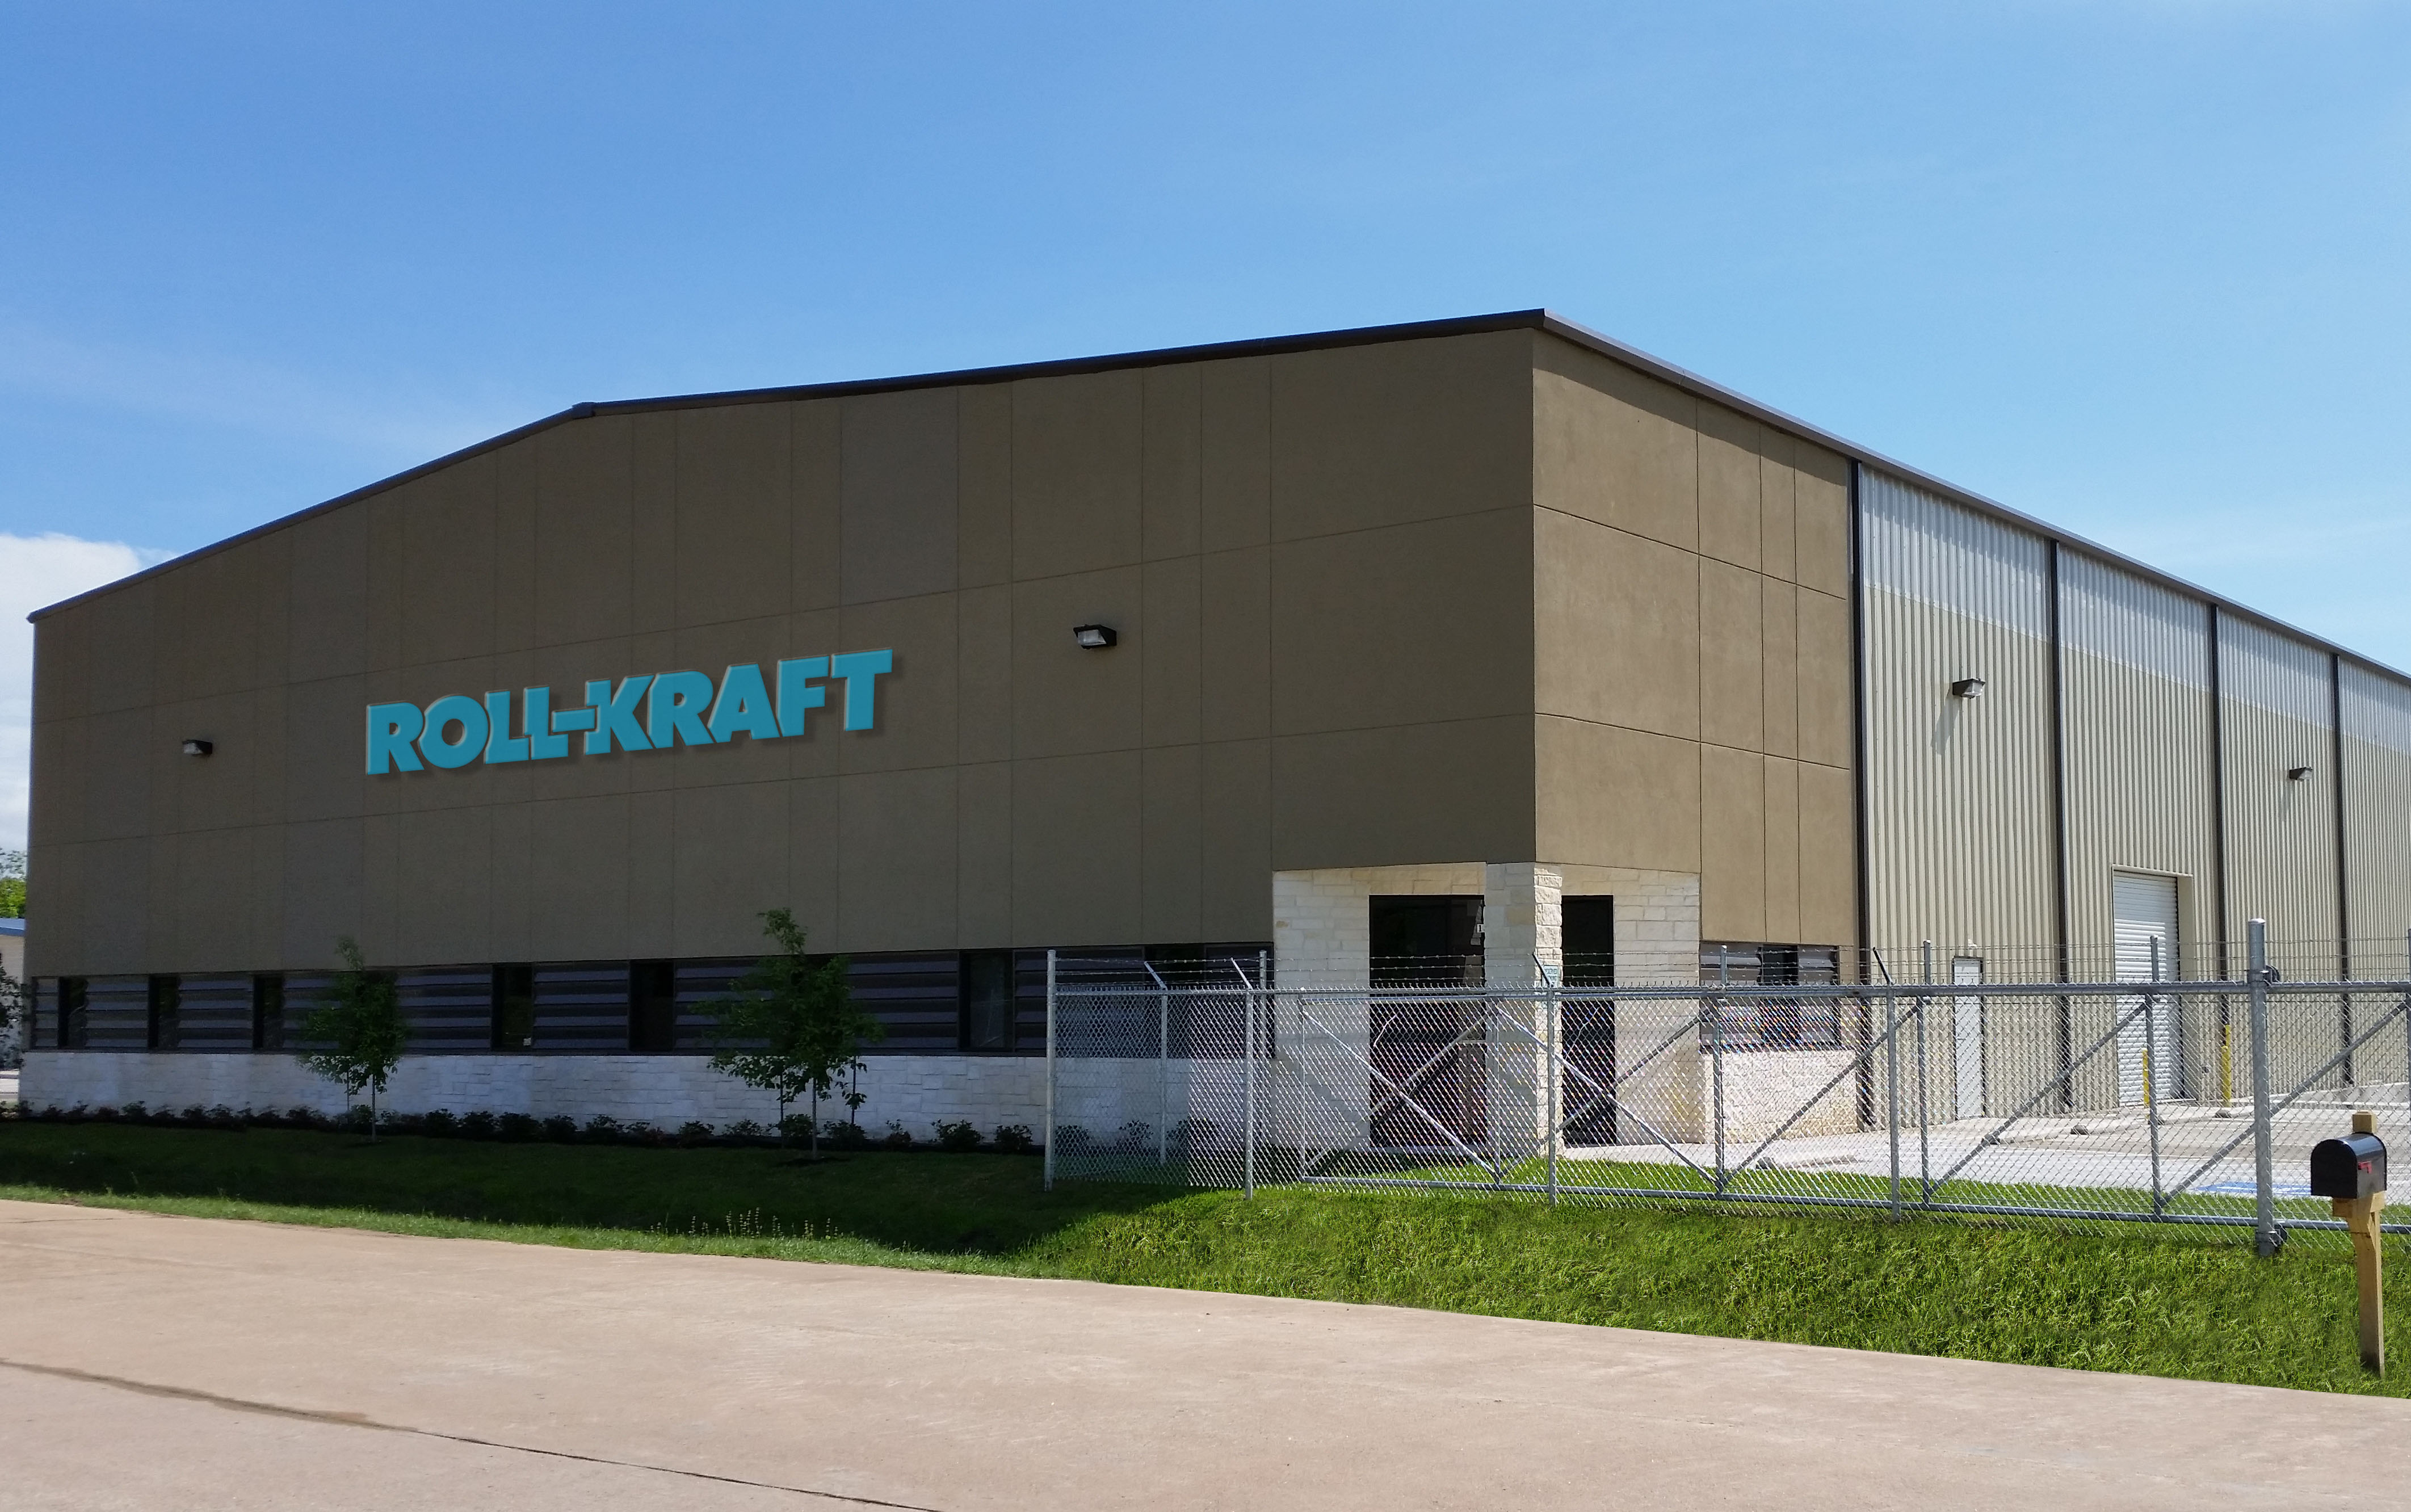 Roll-Kraft's Regrind Center in Houston, Texas